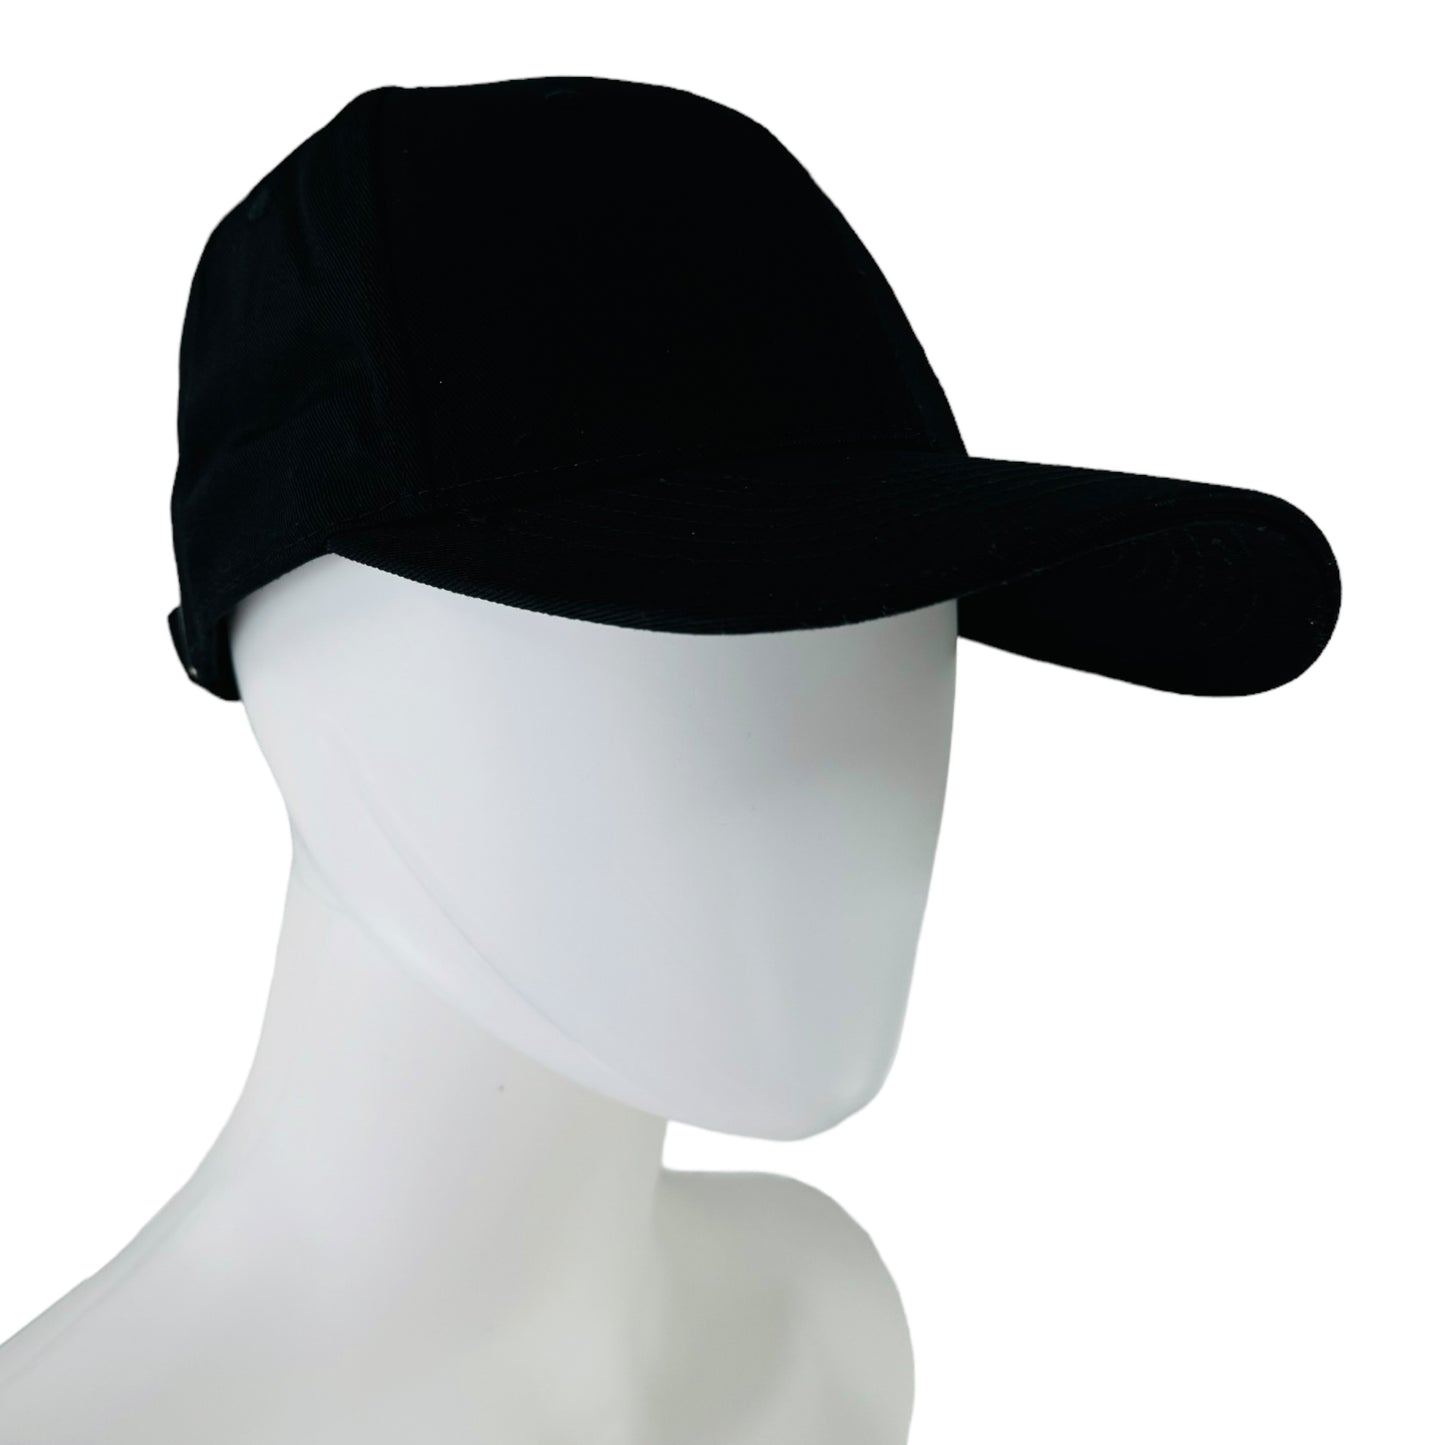 Poshing 4 Paws Unisex Adjustable Baseball Cap in Black